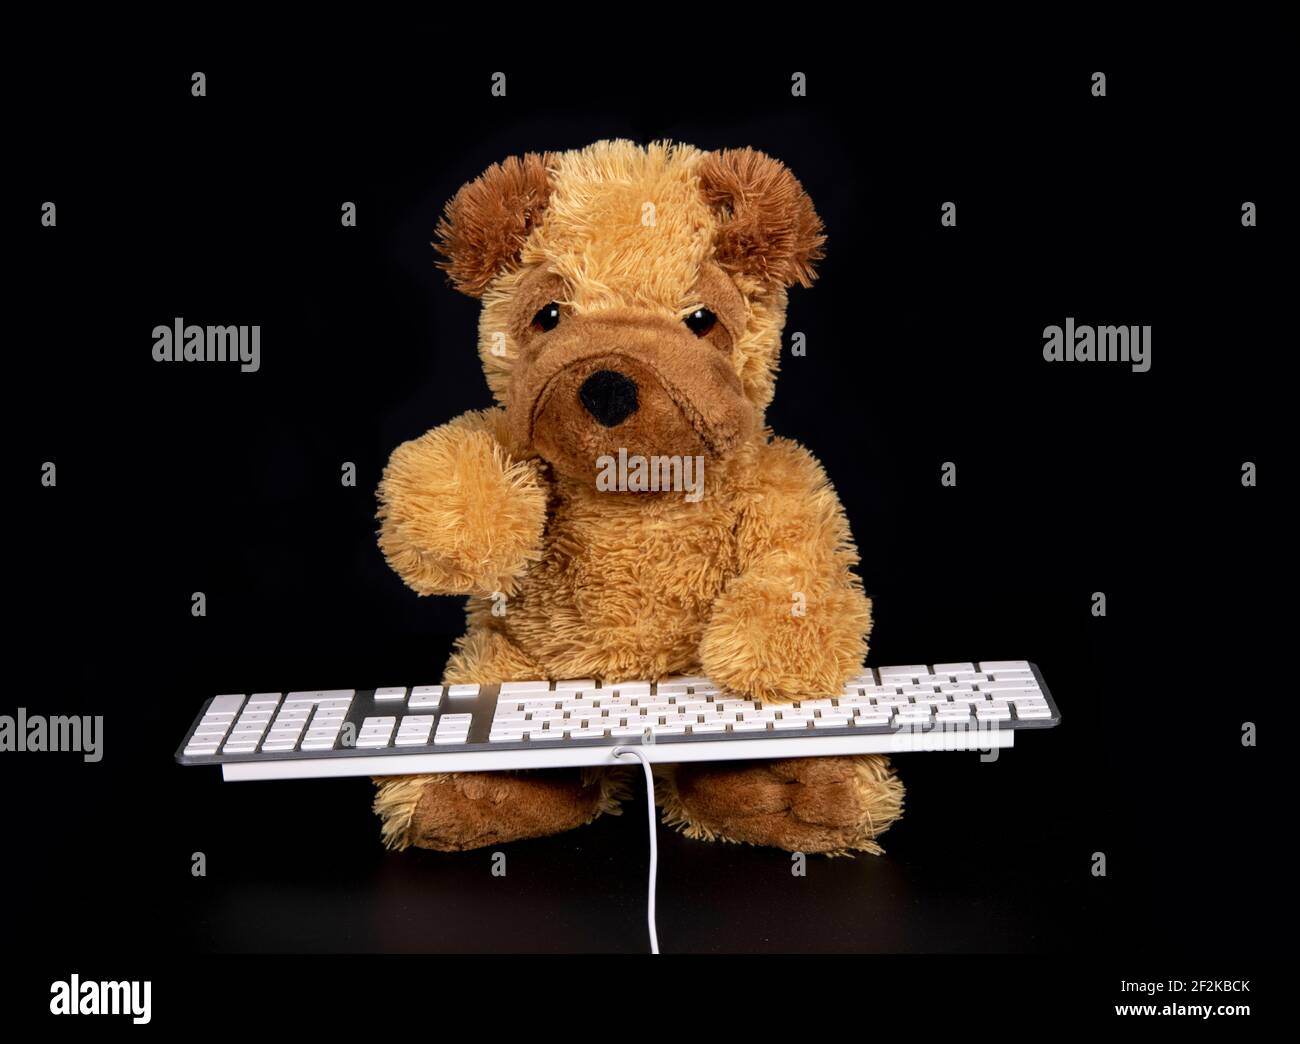 Teddy dog typing on keyboard Stock Photo